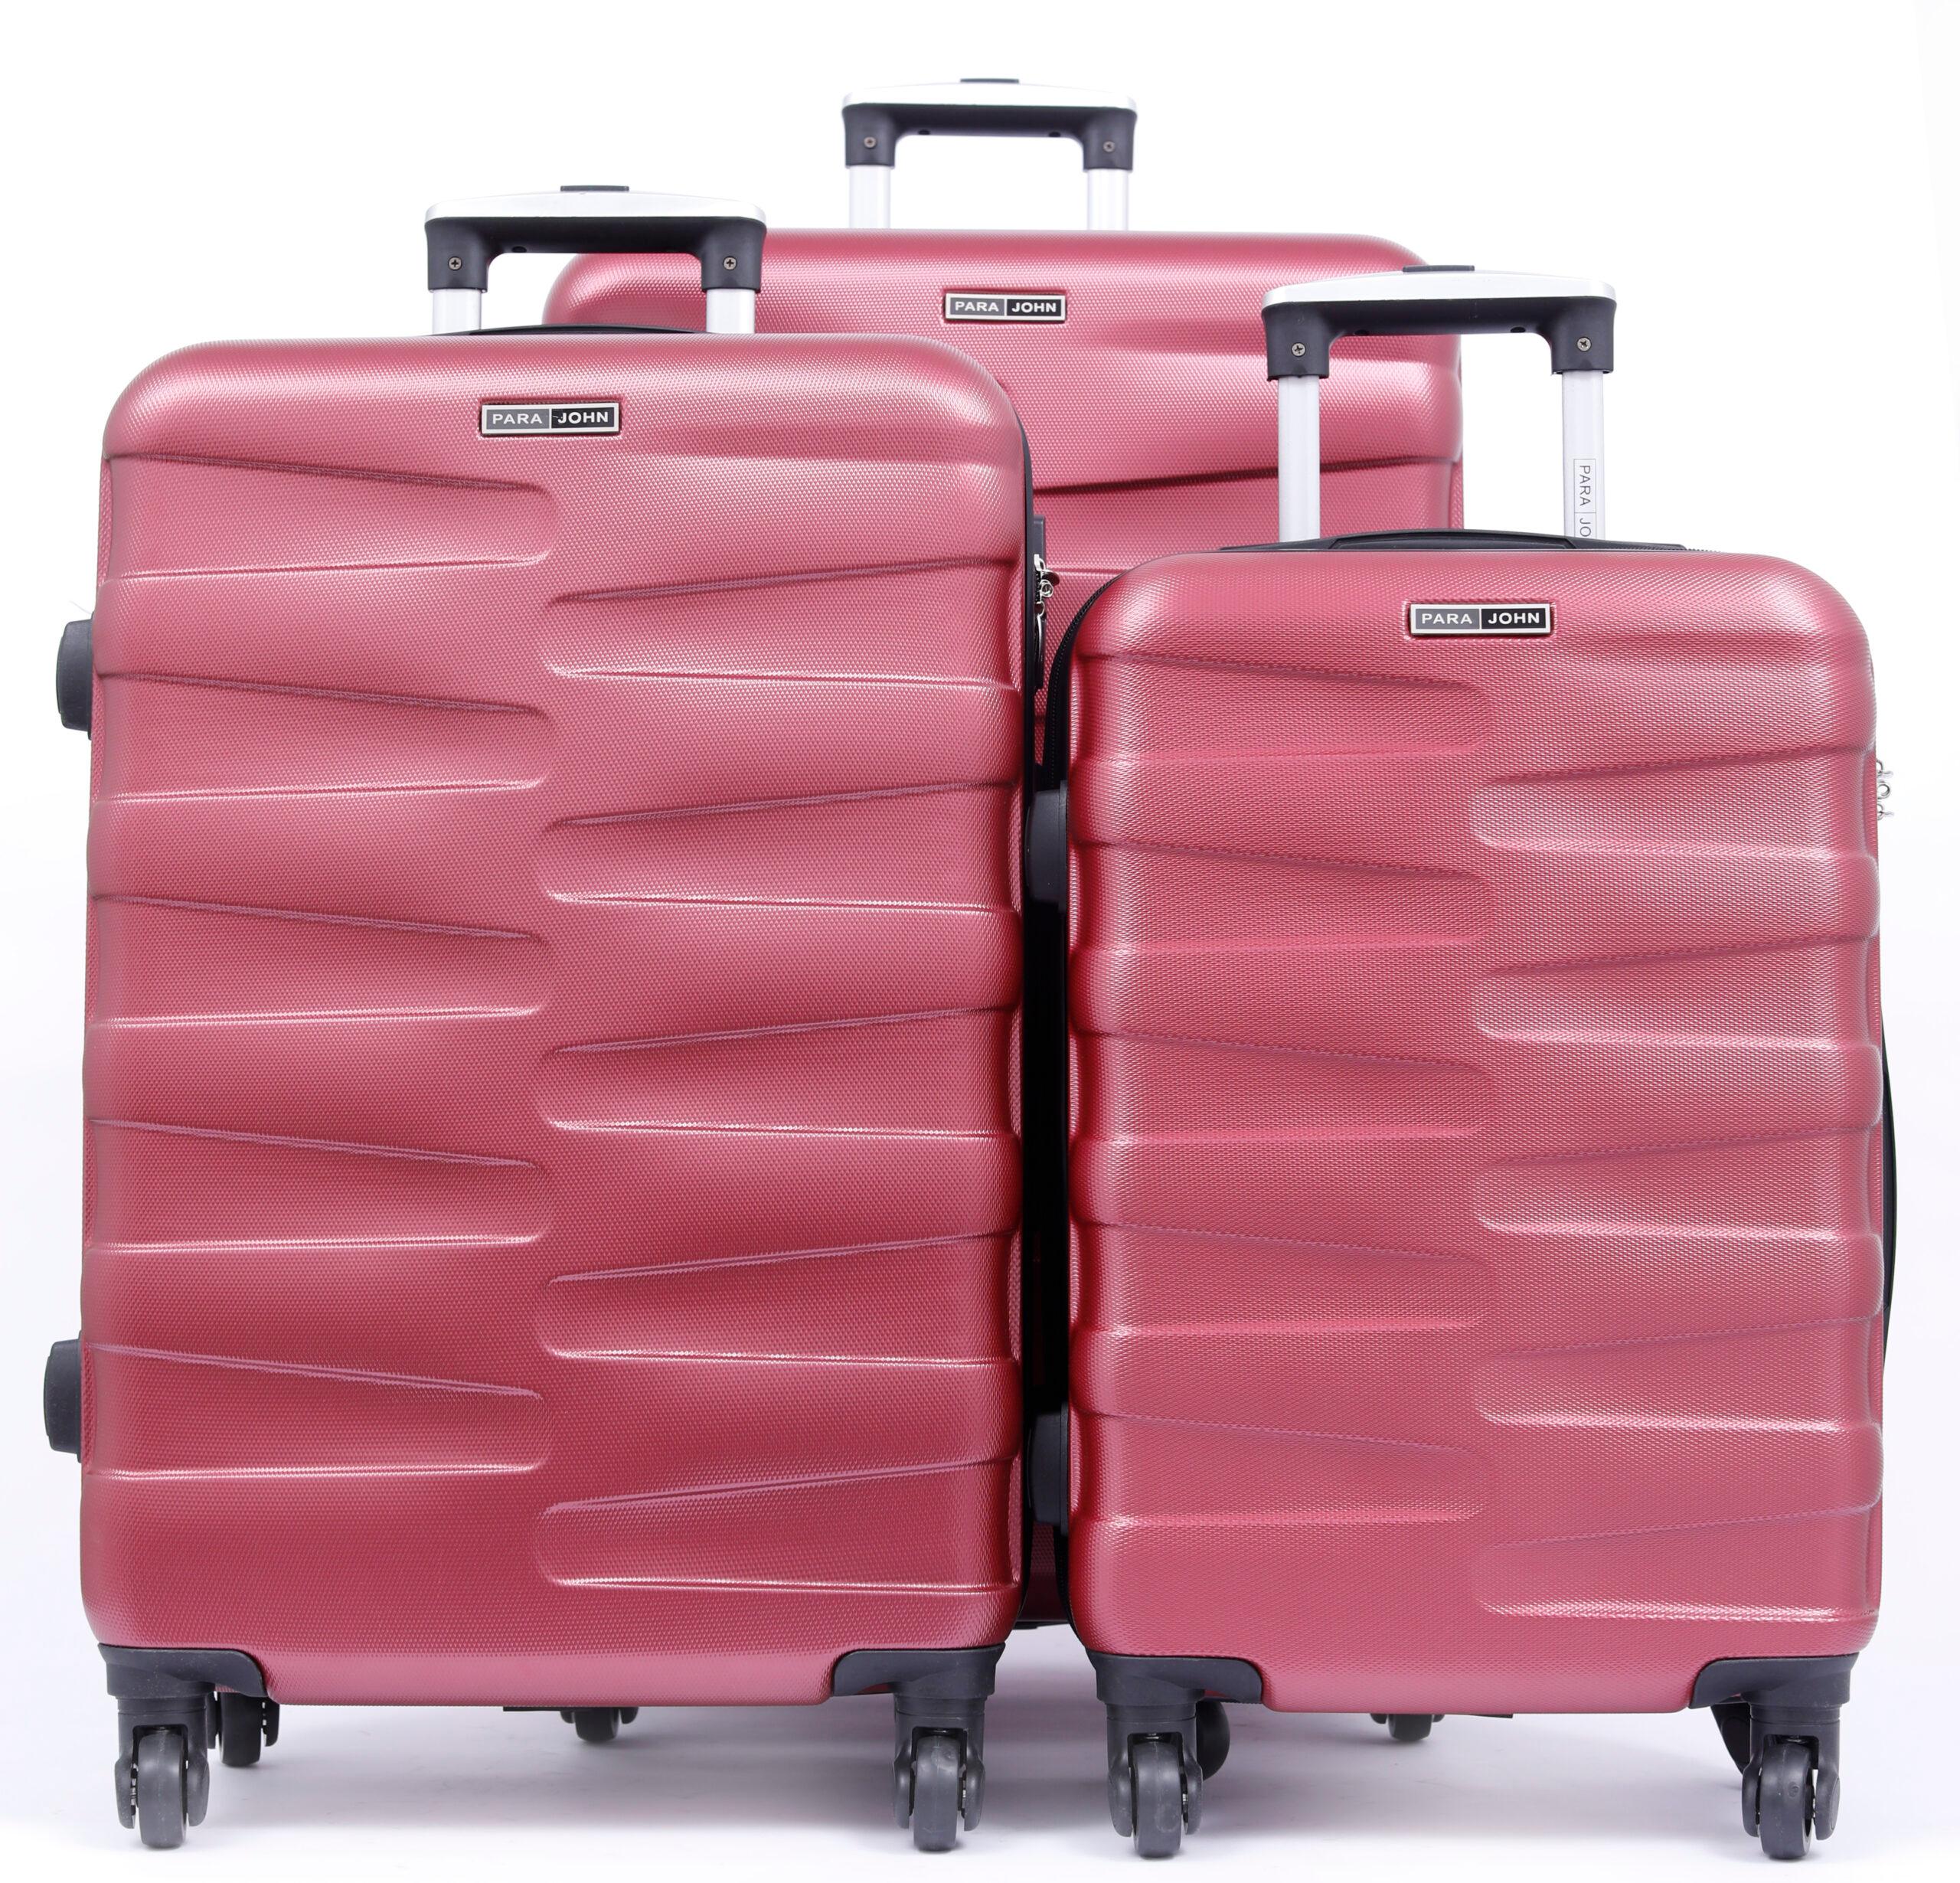 طقم حقائب سفر 3 حقائب مادة ABS بعجلات دوارة (20 ، 24 ، 28) بوصة أحمر PARA JOHN - Travel Luggage Suitcase Set of 3 -  Trolley Bag, Carry On Hand Cabin Luggage Bag (20 ، 24 ، 28) inch - cG9zdDo0MzgwNzk=